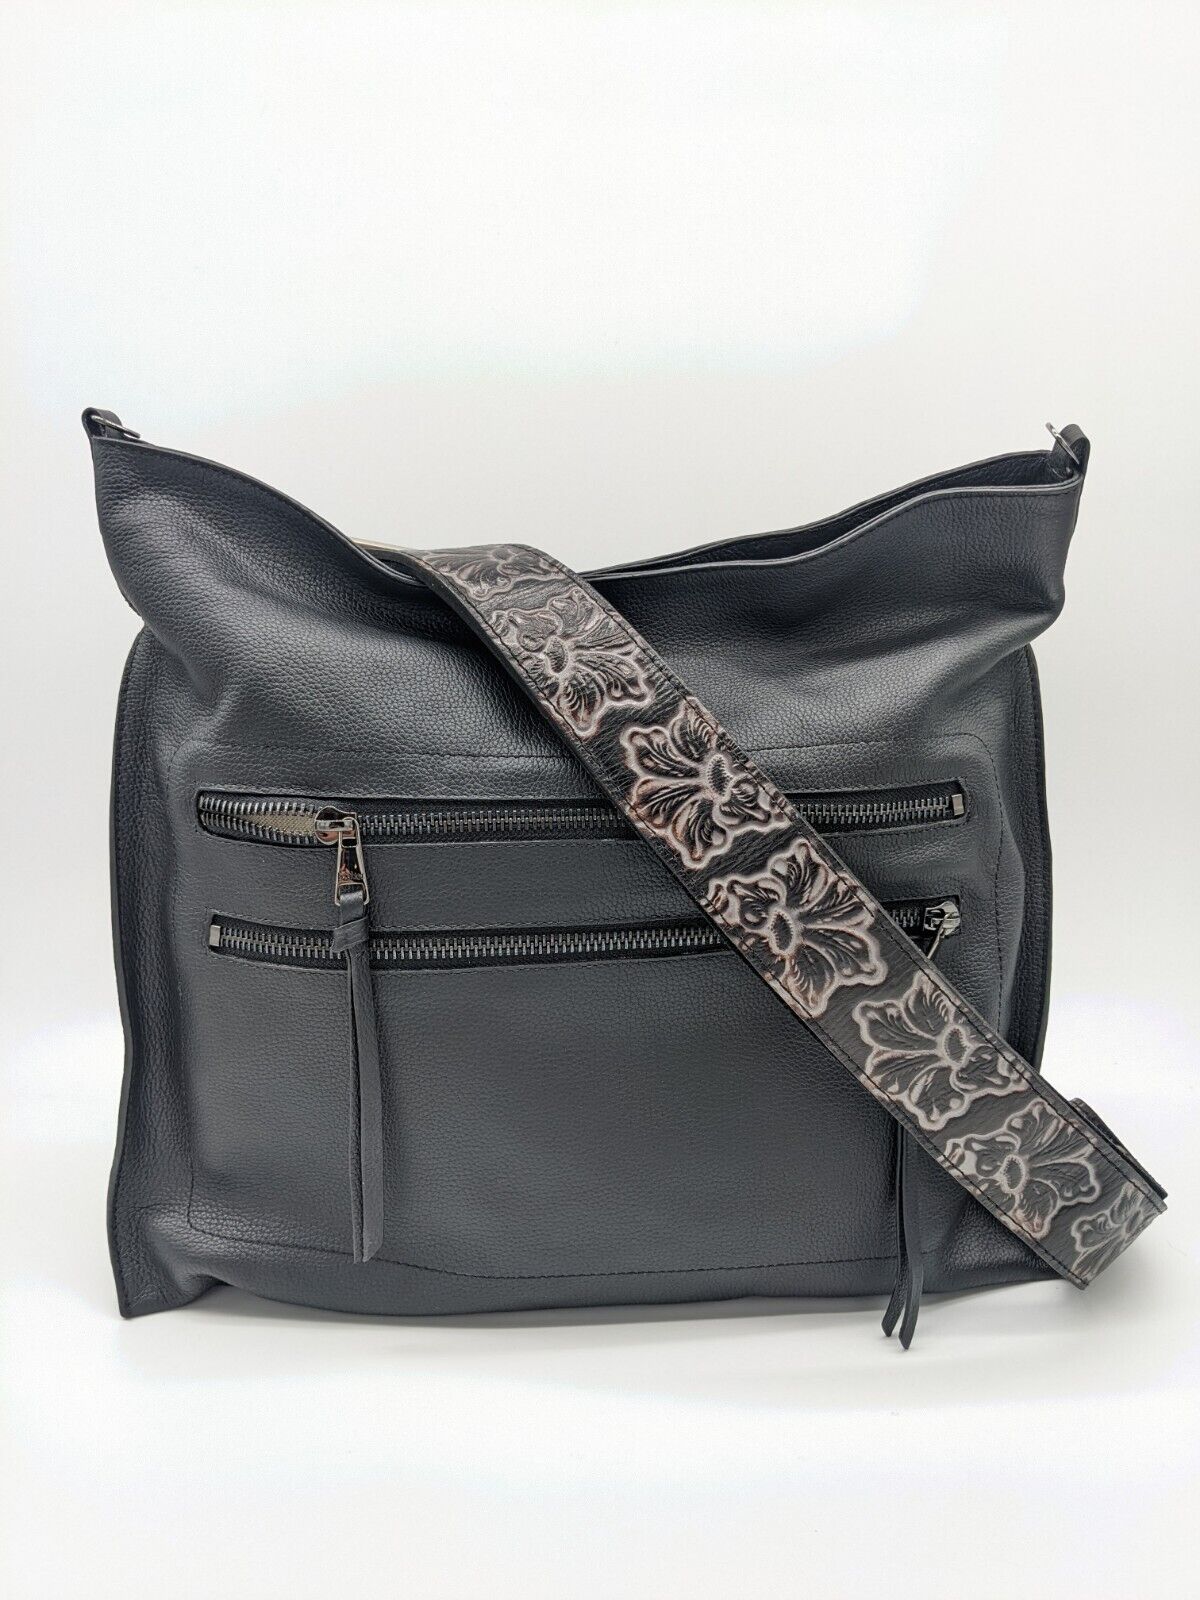 BOTKIER Chelsea leather women\'s Large hobo shoulder crossbody bag purse - BLACK